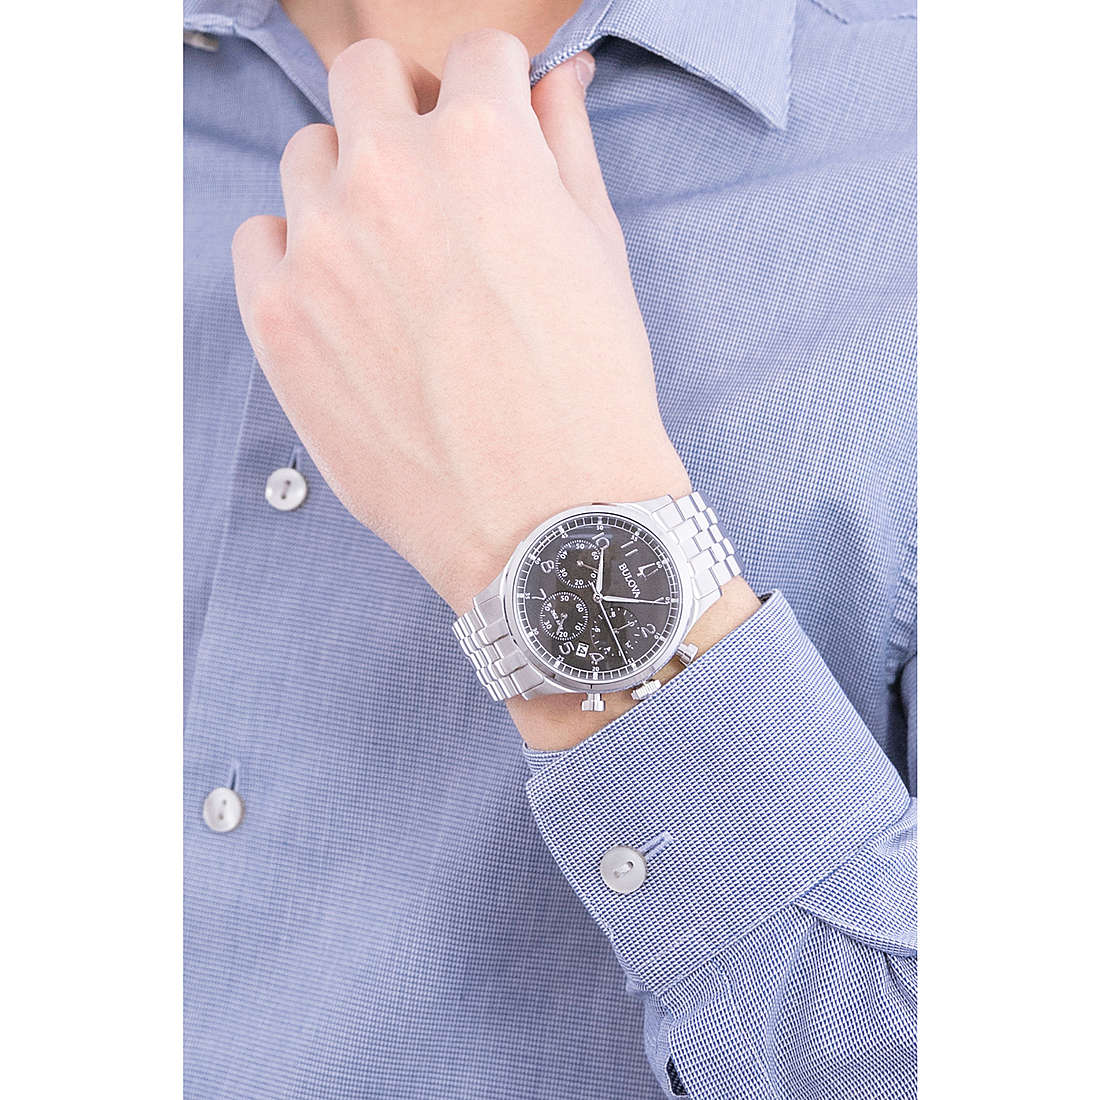 Bulova chronographs Classic man 96B357 wearing